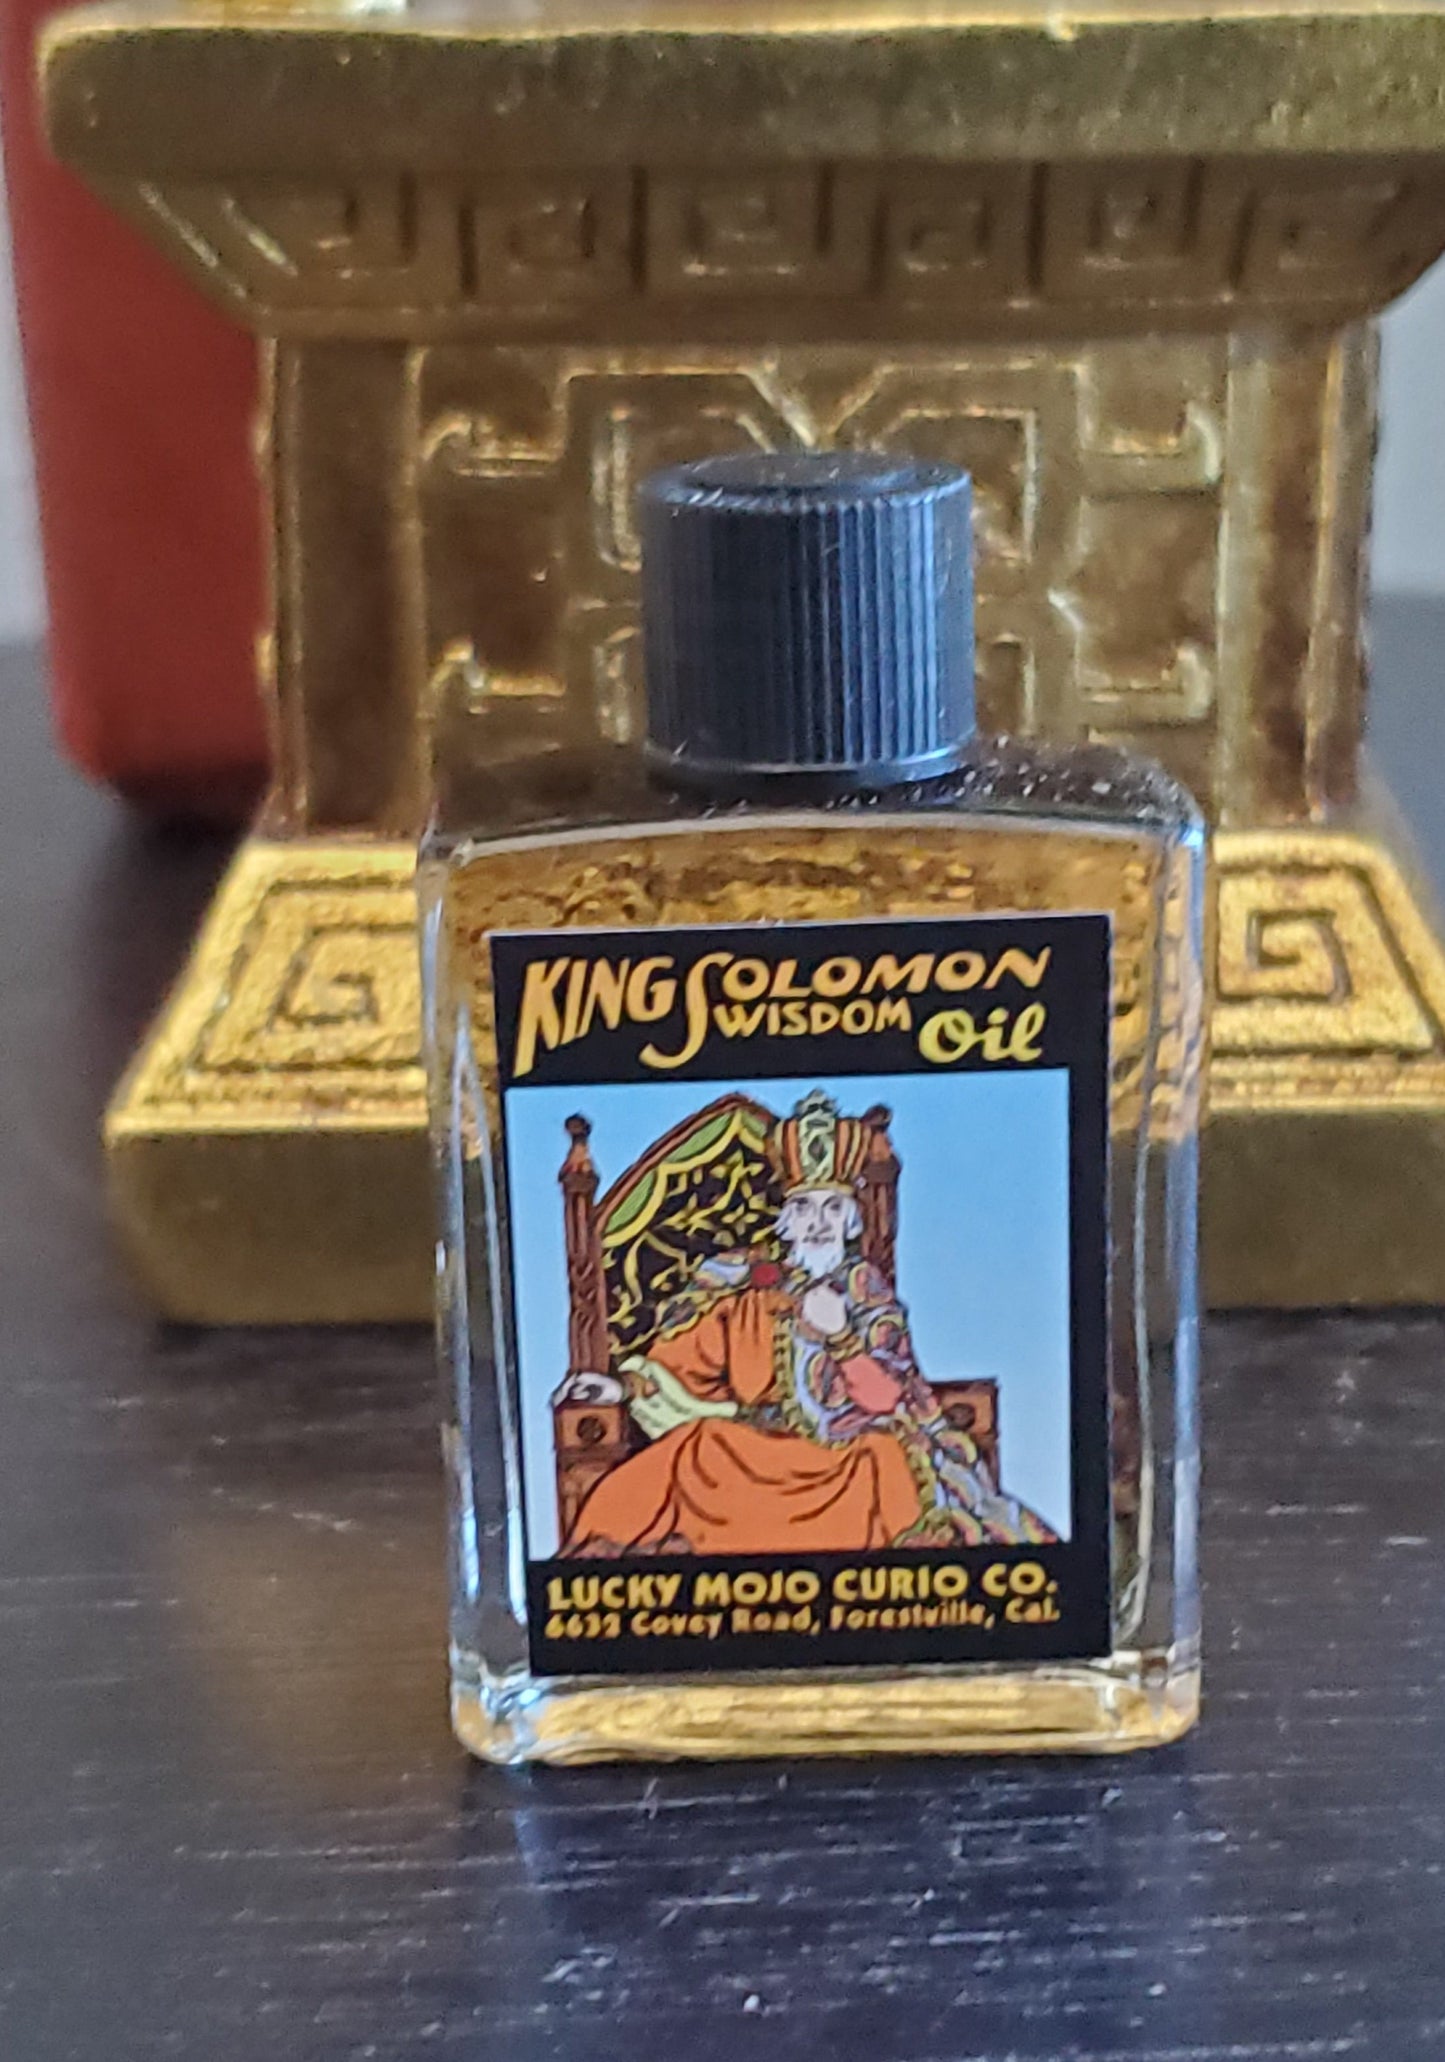 LuckyMojoCurioCo "King Solomon Wisdom Oil" Anointing / Conjure Oil #Great Deal #LuckyMojoCurioCo #LuckyMojo #EffectiveOils #WisdomOil